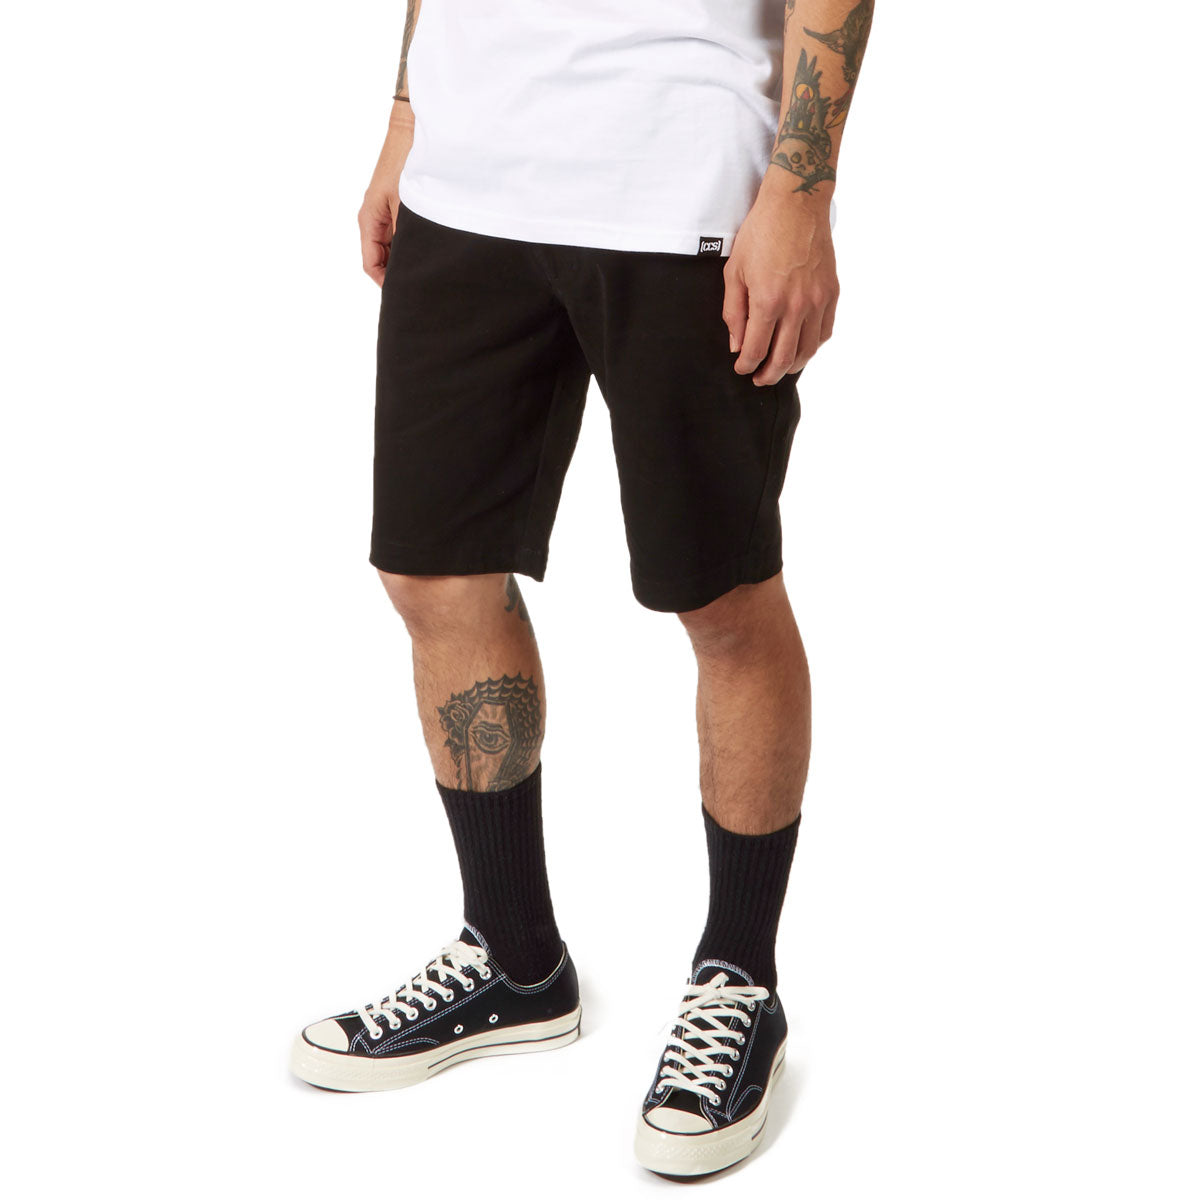 CCS Standard Plus Chino Shorts - Black image 3